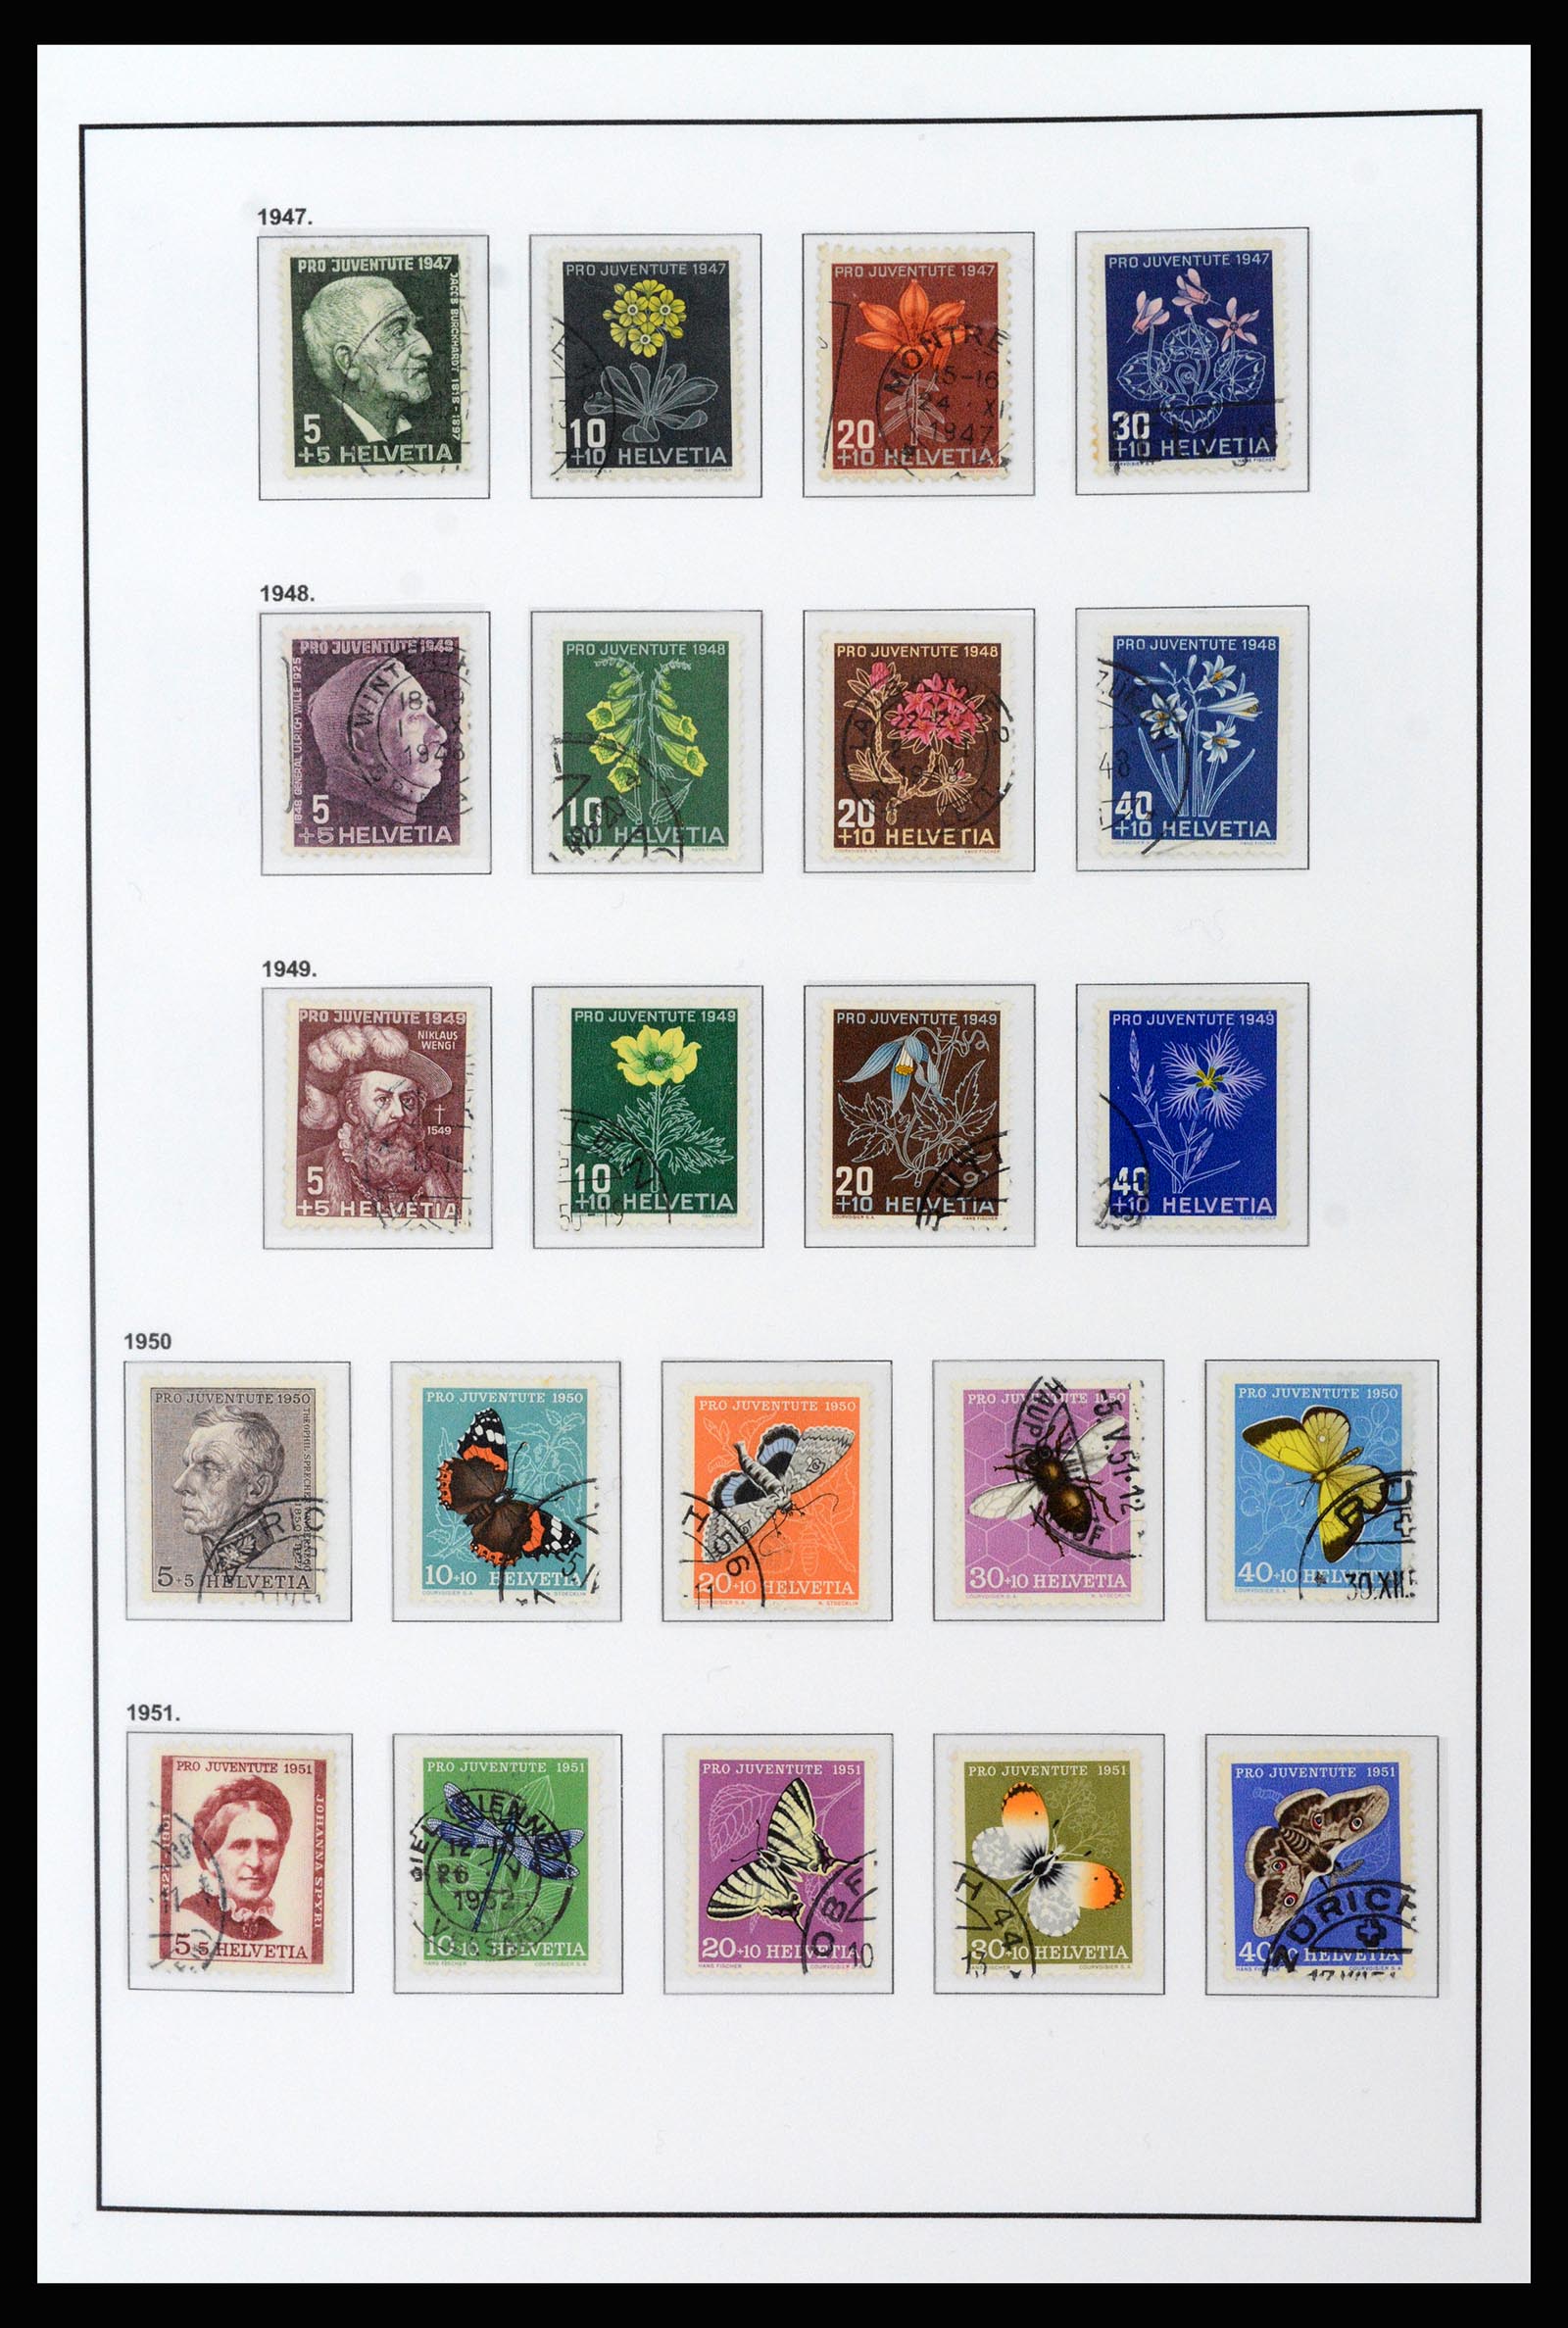 37225 062 - Stamp collection 37225 Switzerland 1854-2020.